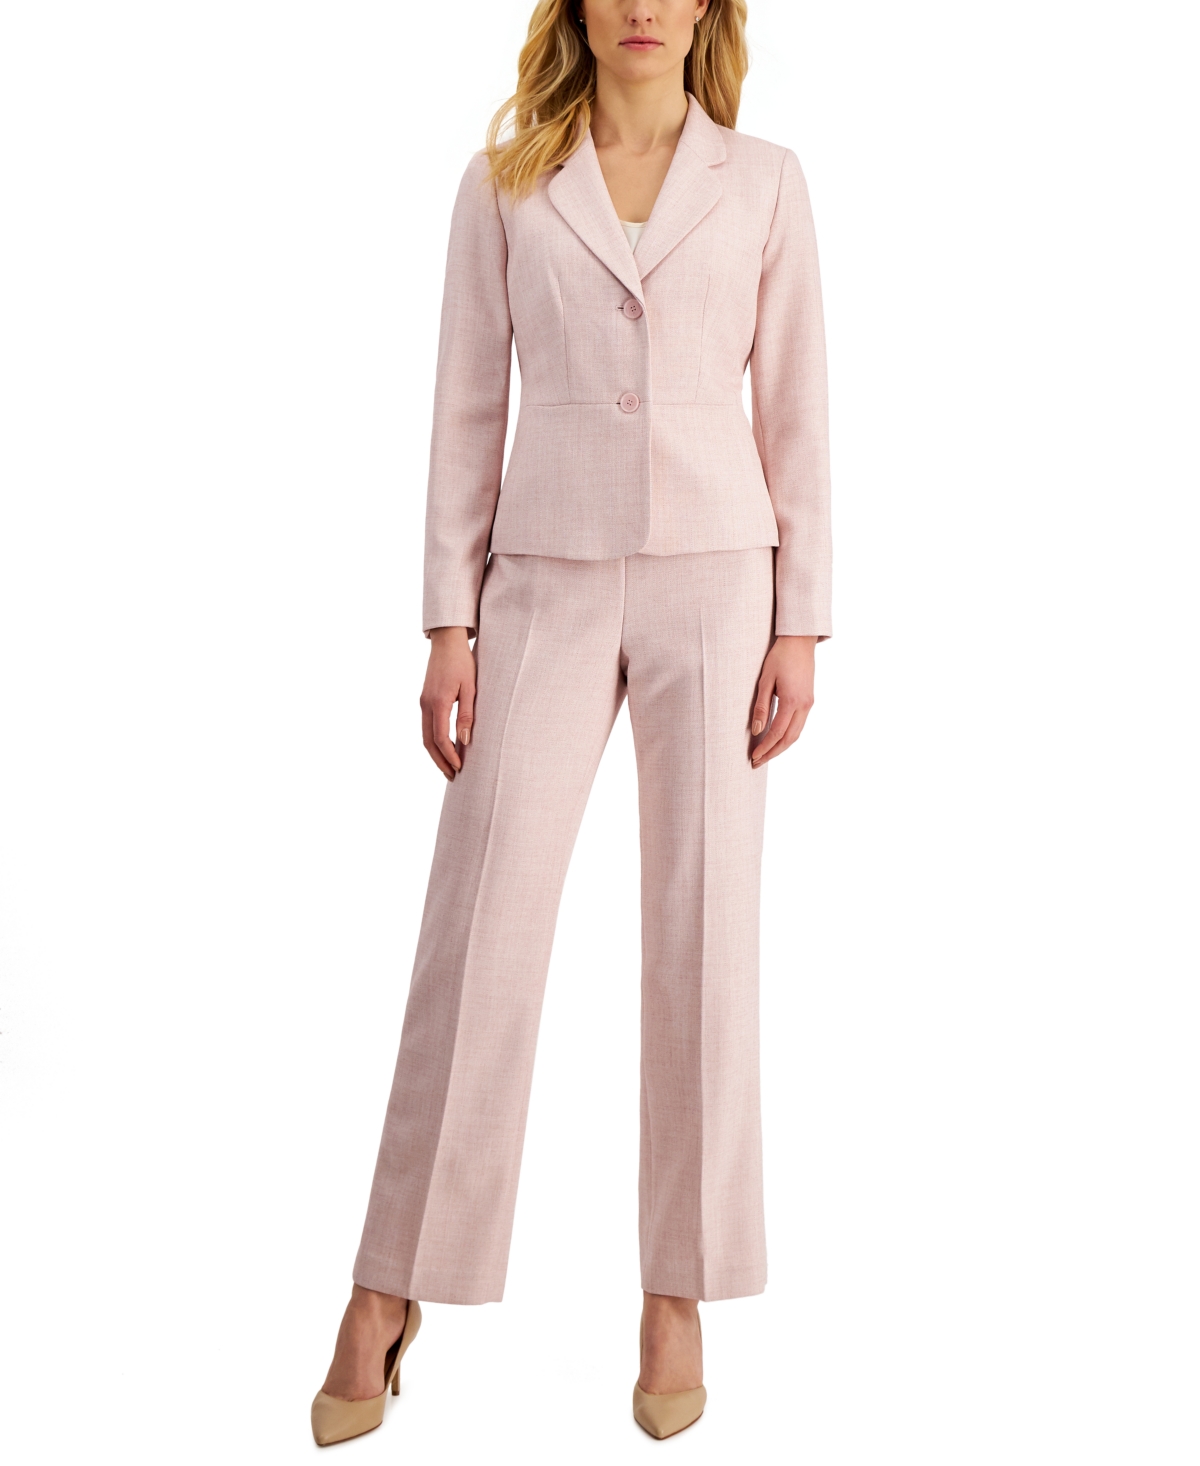 Le Suit Women's Notch-collar Pantsuit, Regular And Petite Sizes In Lt Blossom Combo